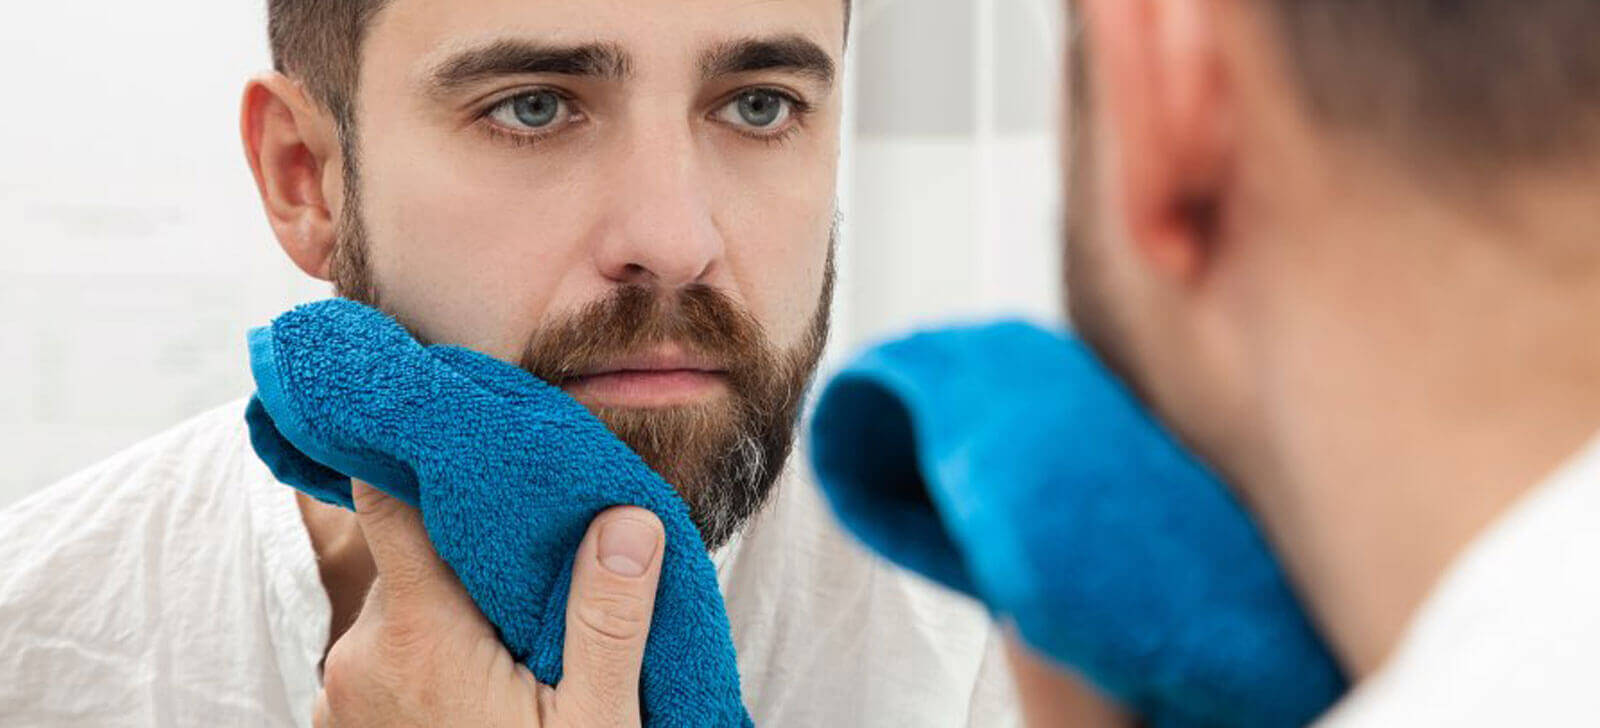 farmacia manipulacao campinas nova natural blog natureza magistral barba higiene regiao barba